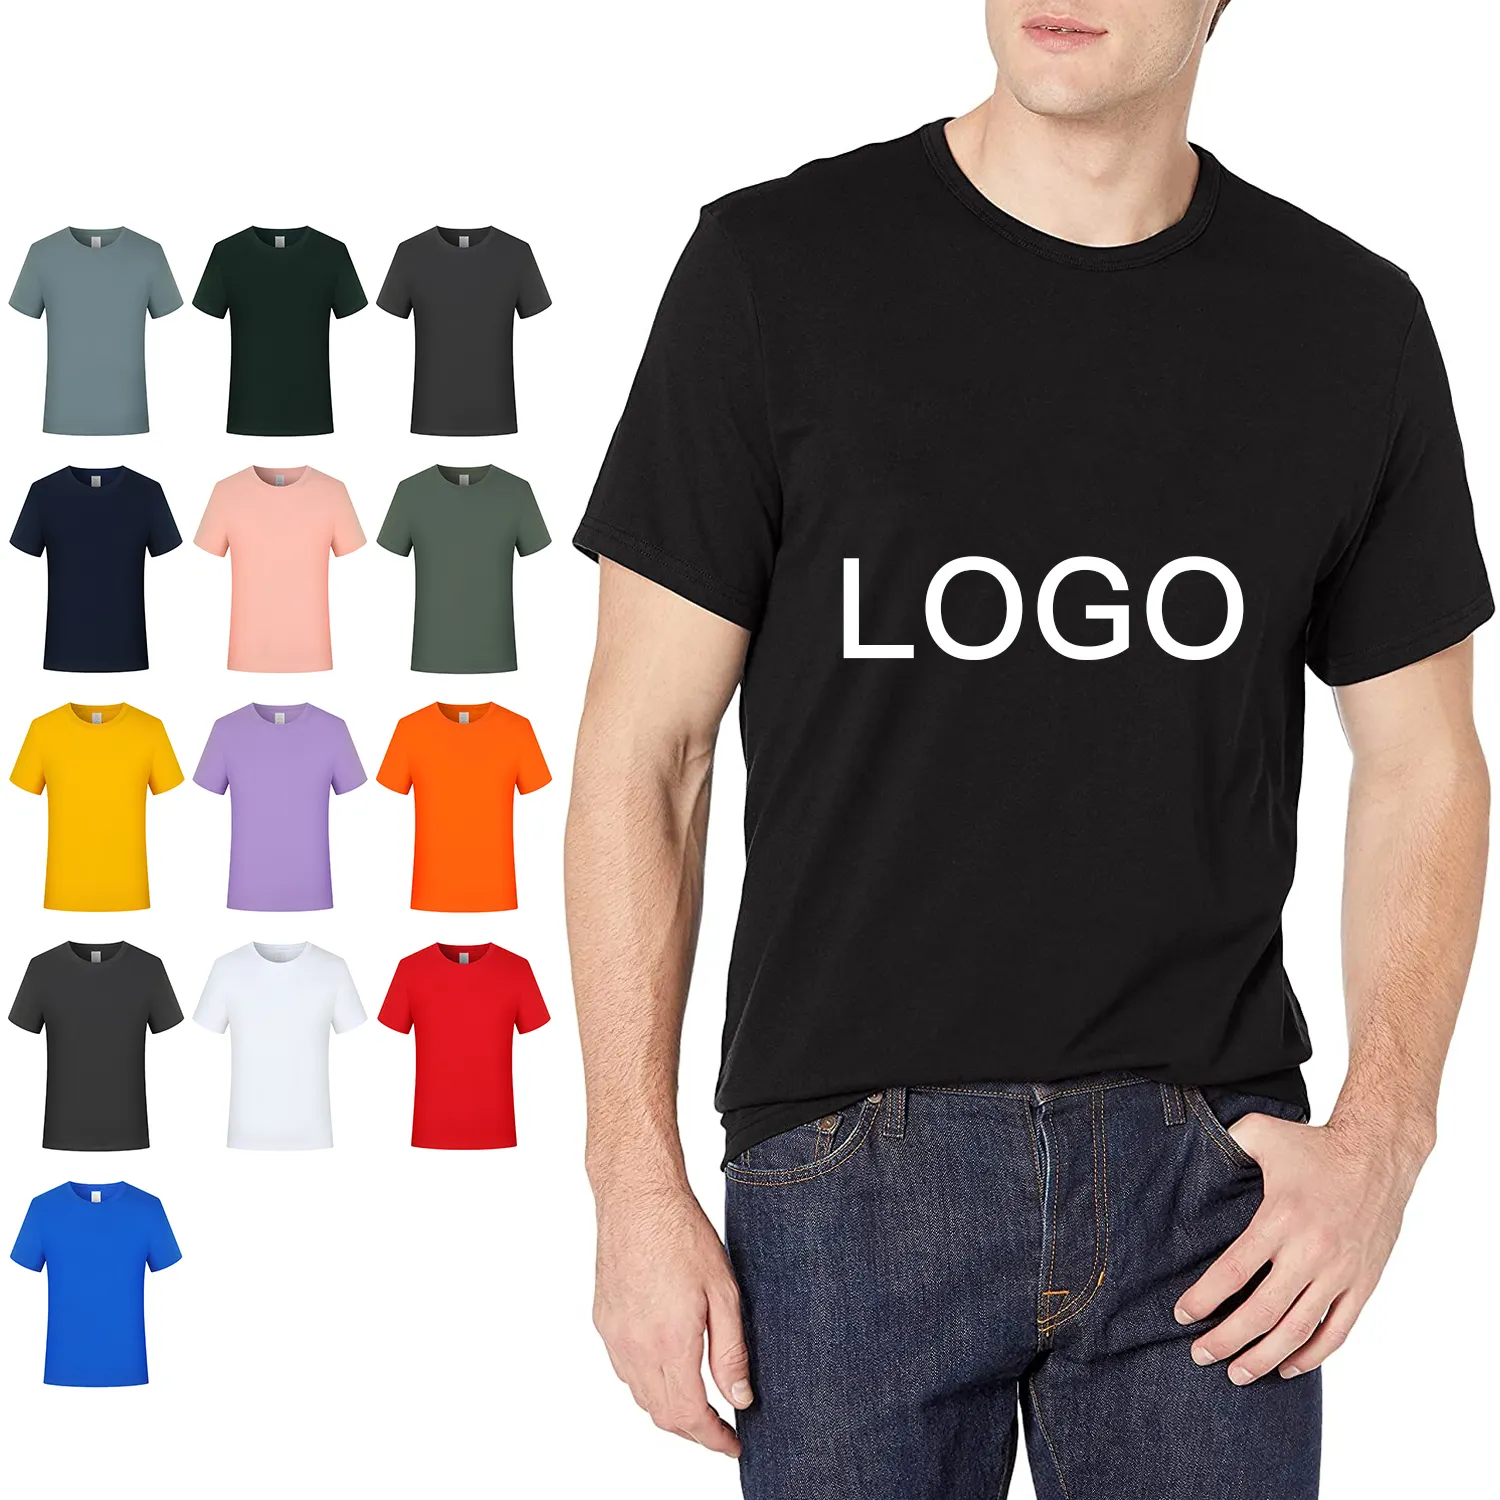 T-shirt custom printed logo cotton short-sleeved white body shirt men's work clothes cultural advertising shirt custom